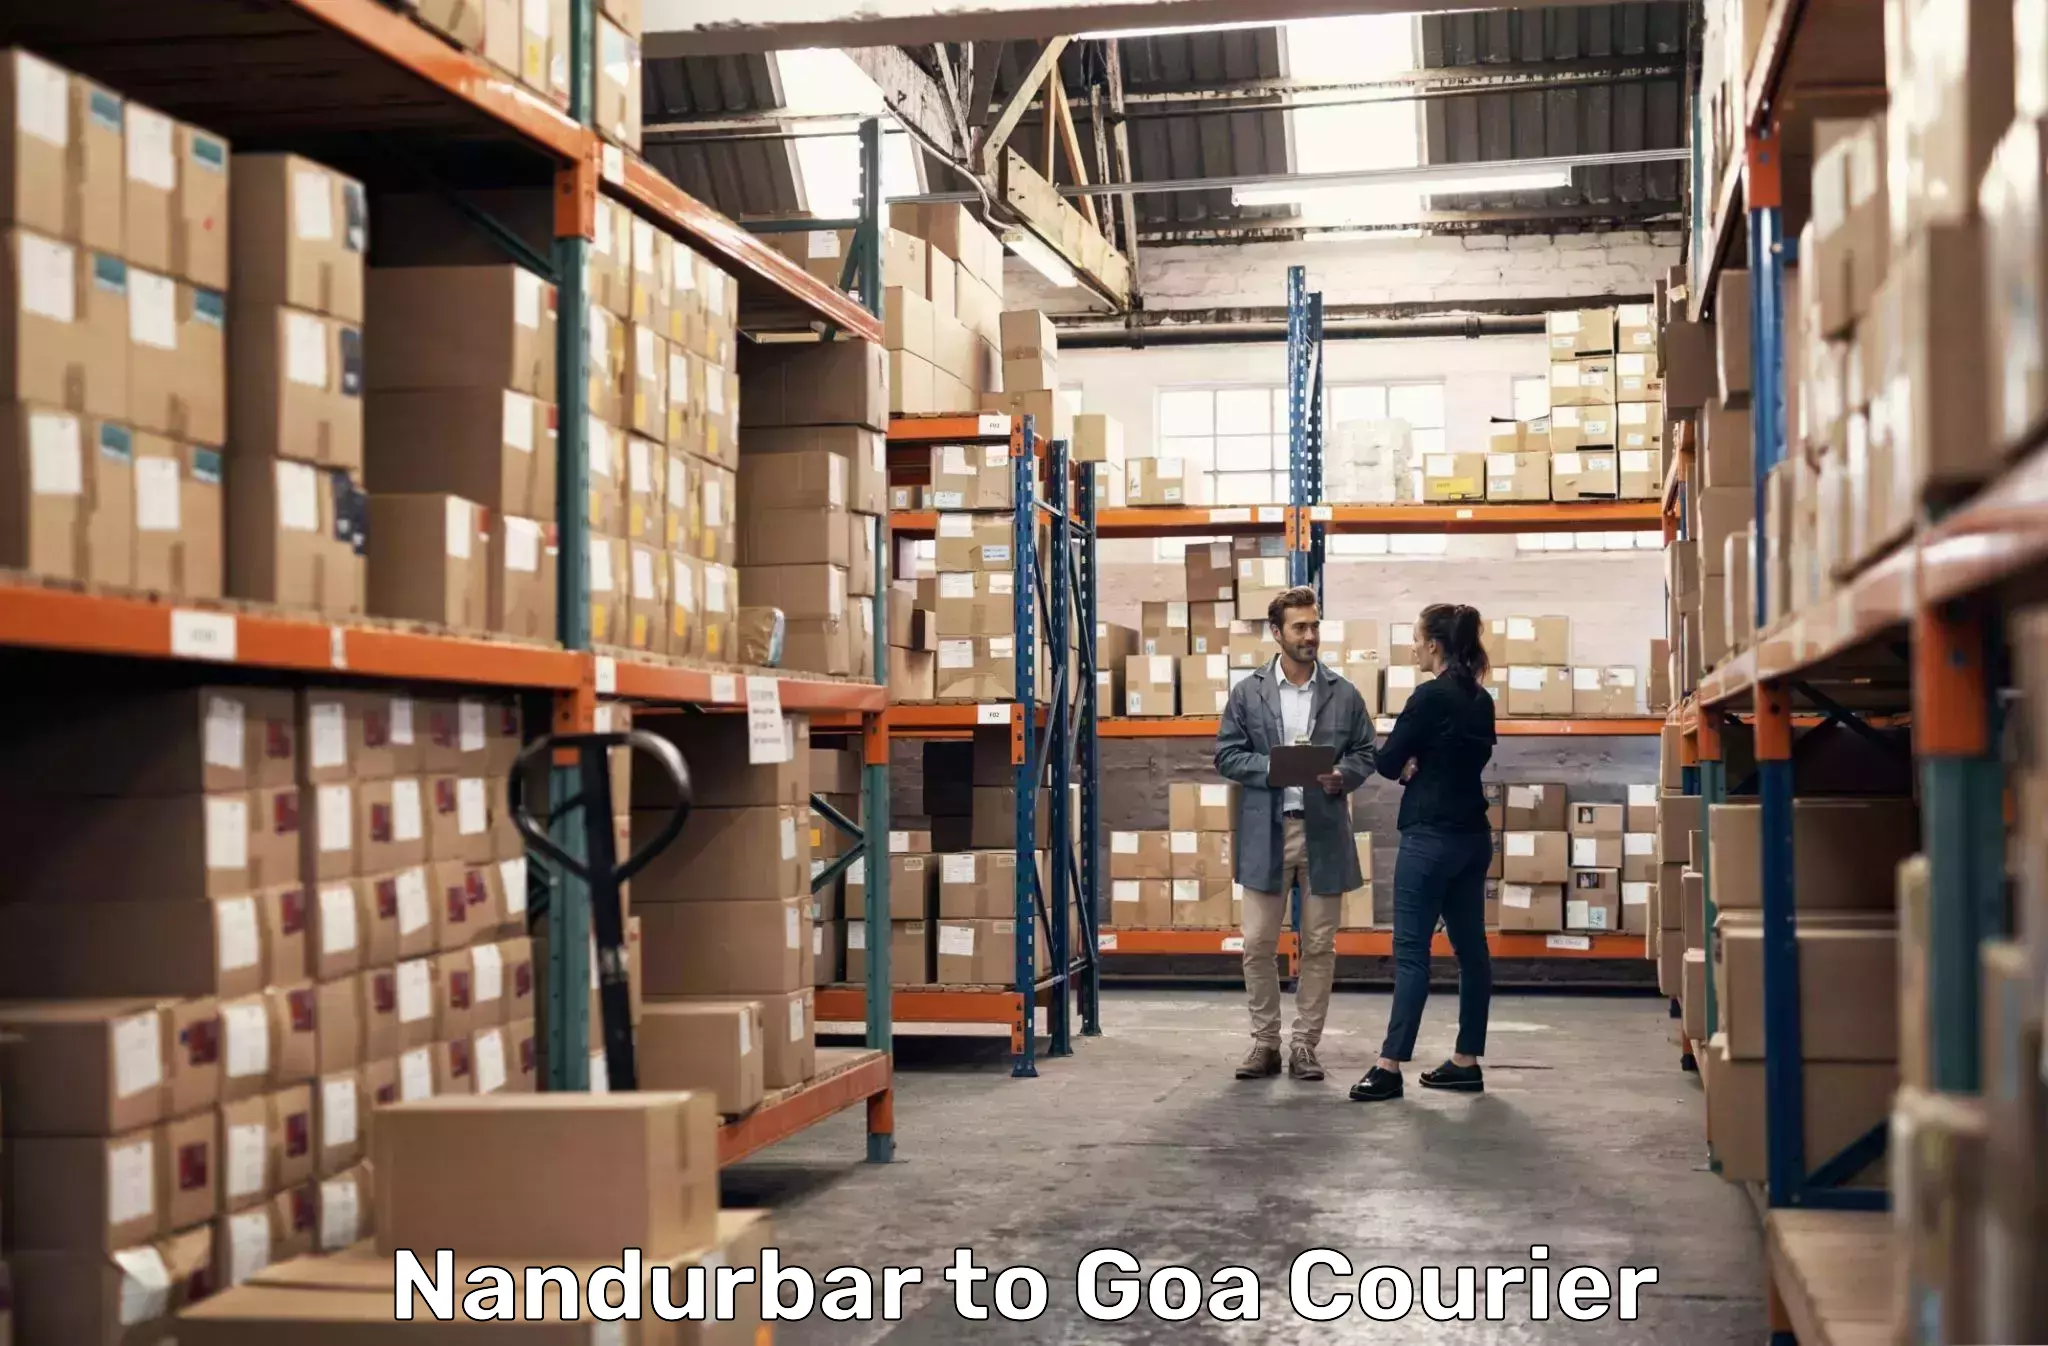 Reliable delivery network Nandurbar to Panaji